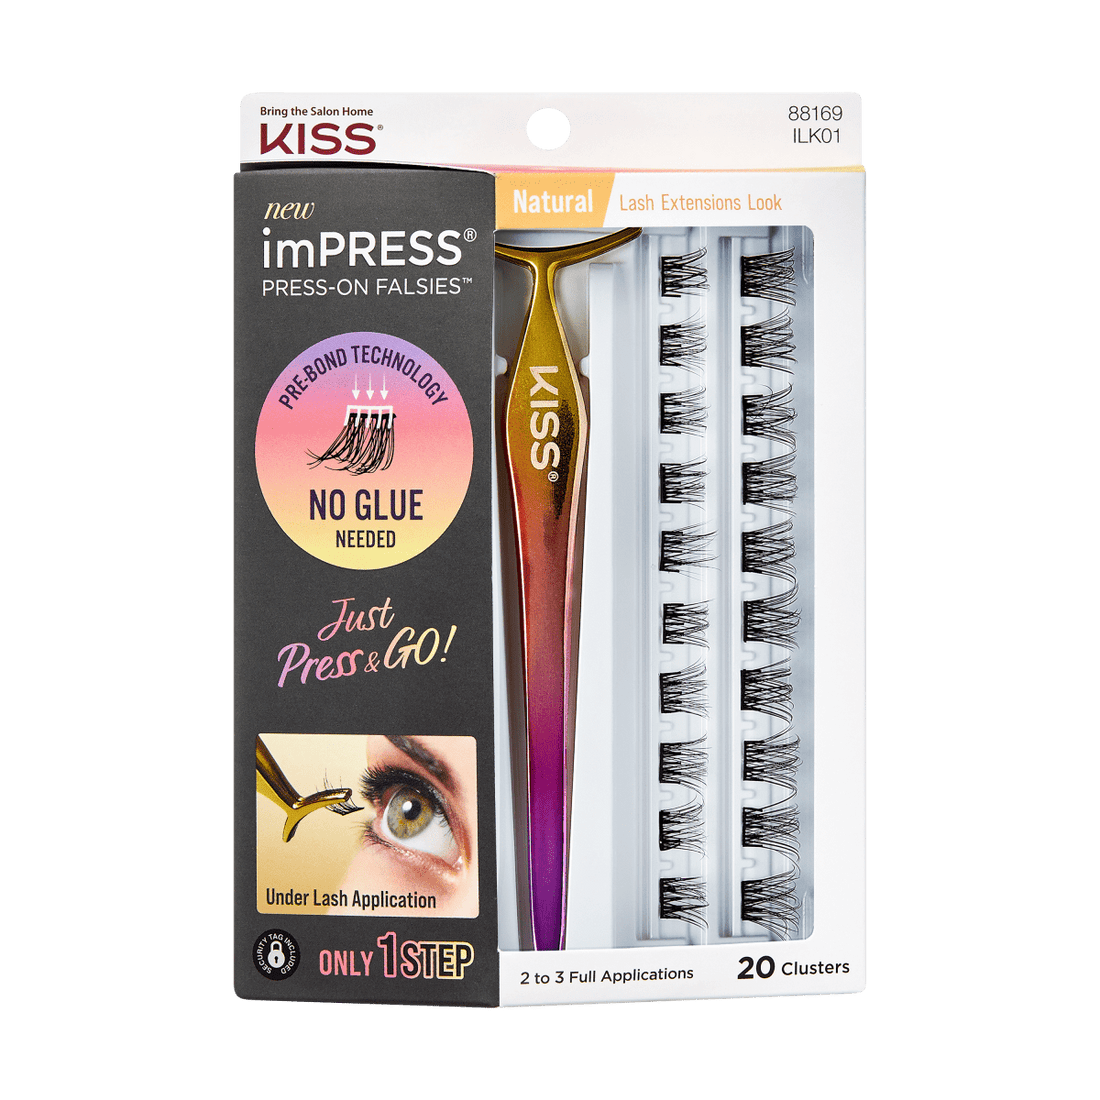 imPRESS Press On Falsies starter kit. Press on false lashes lash kit includes lash wisps and lash applicator no lash glue needed